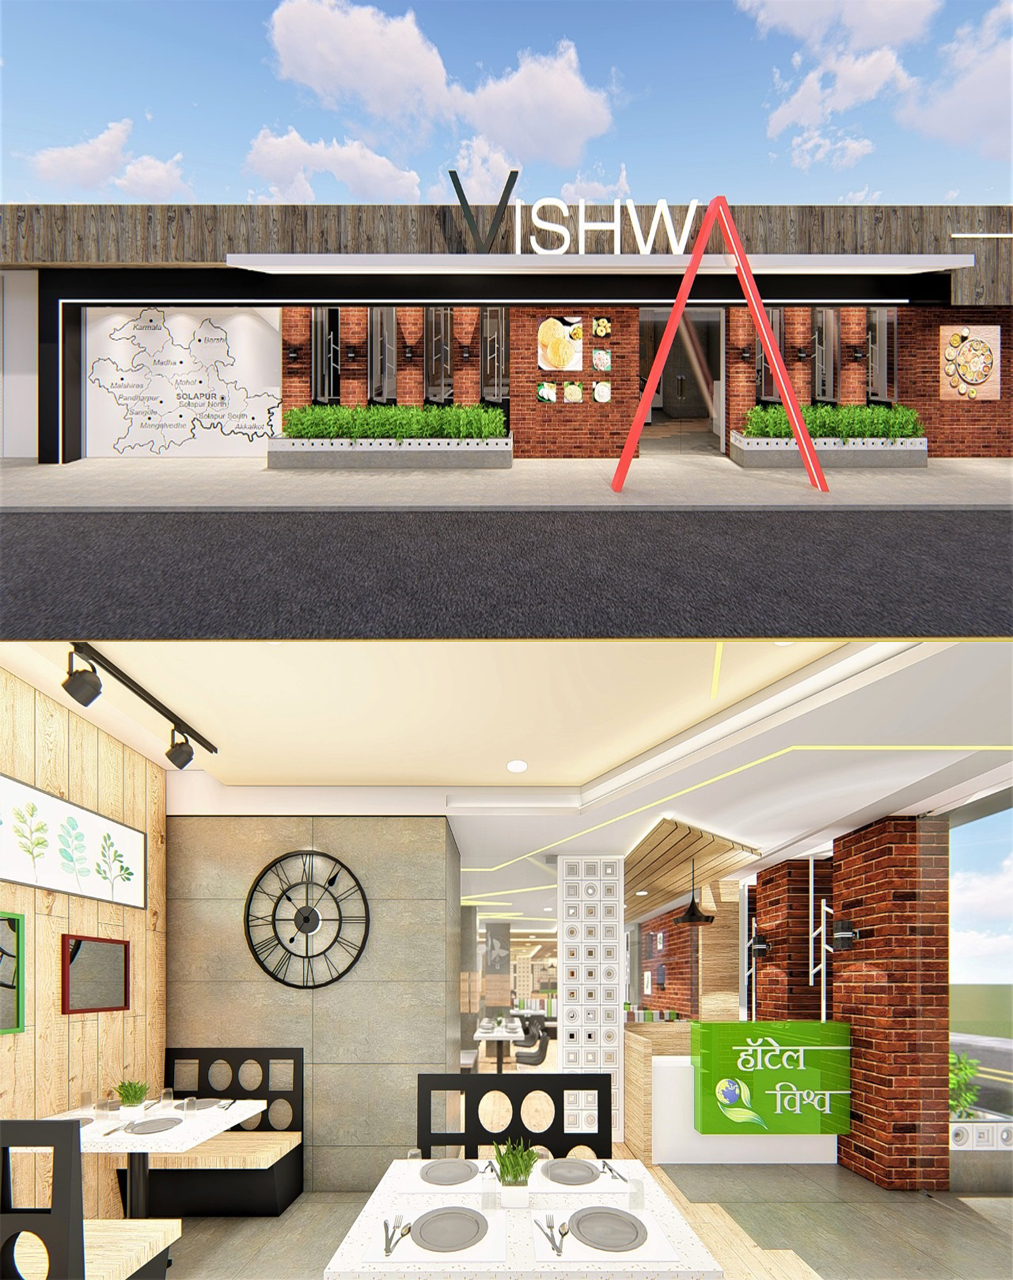 HOTEL VISHWA | SolapurMall.com